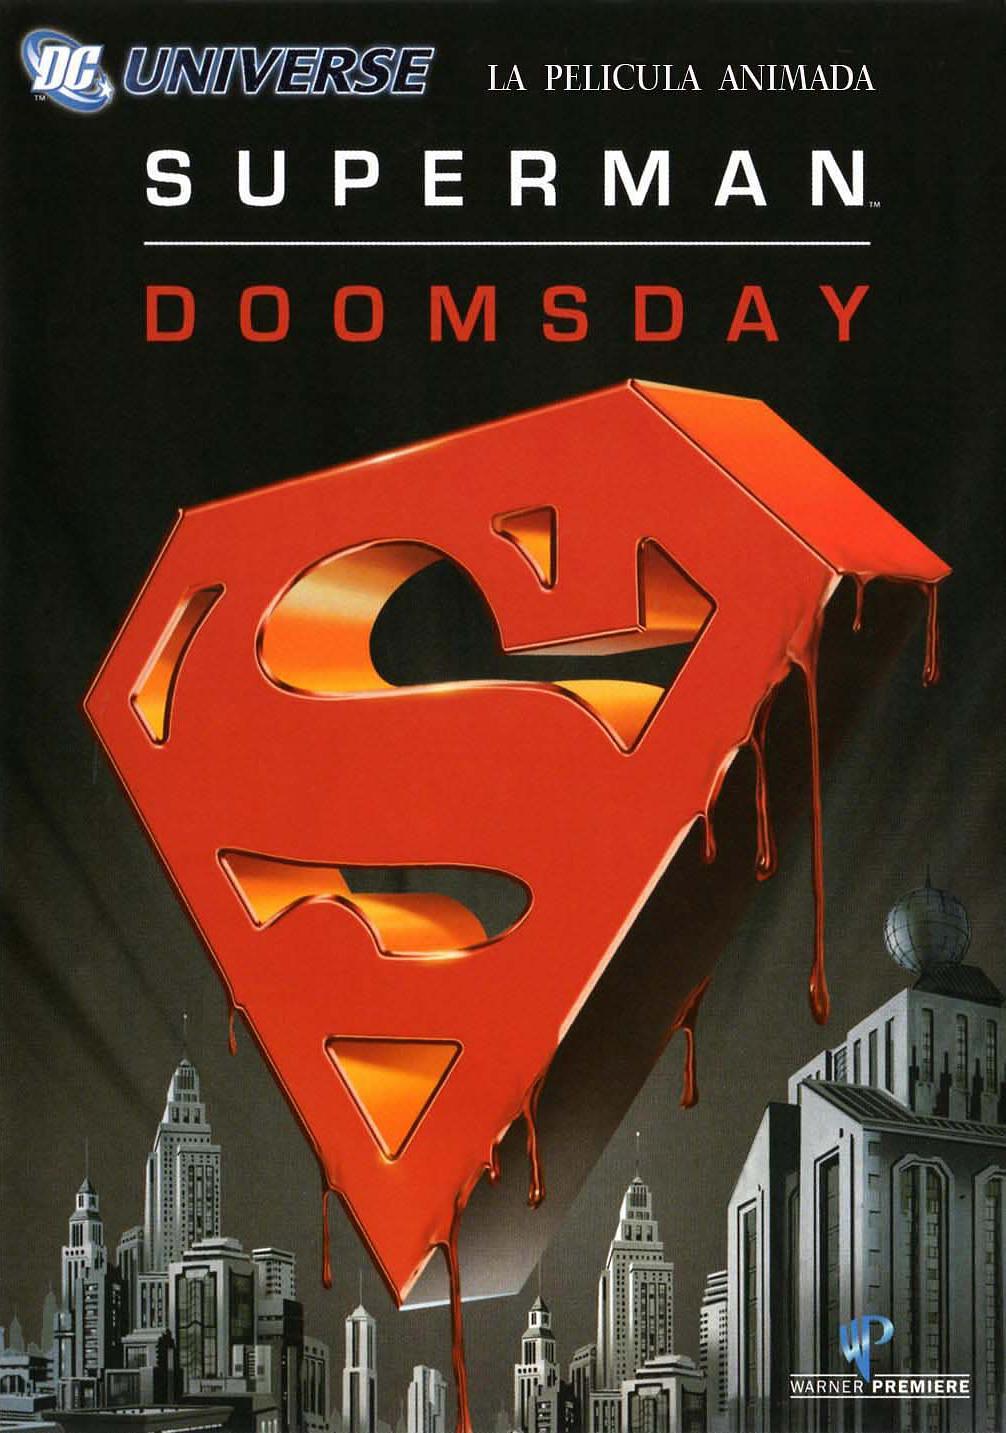 超人之死 Superman.Doomsday.2007.2160p.BluRay.HEVC.DTS-HD.MA.5.1-AViATOR 30.45GB-1.png